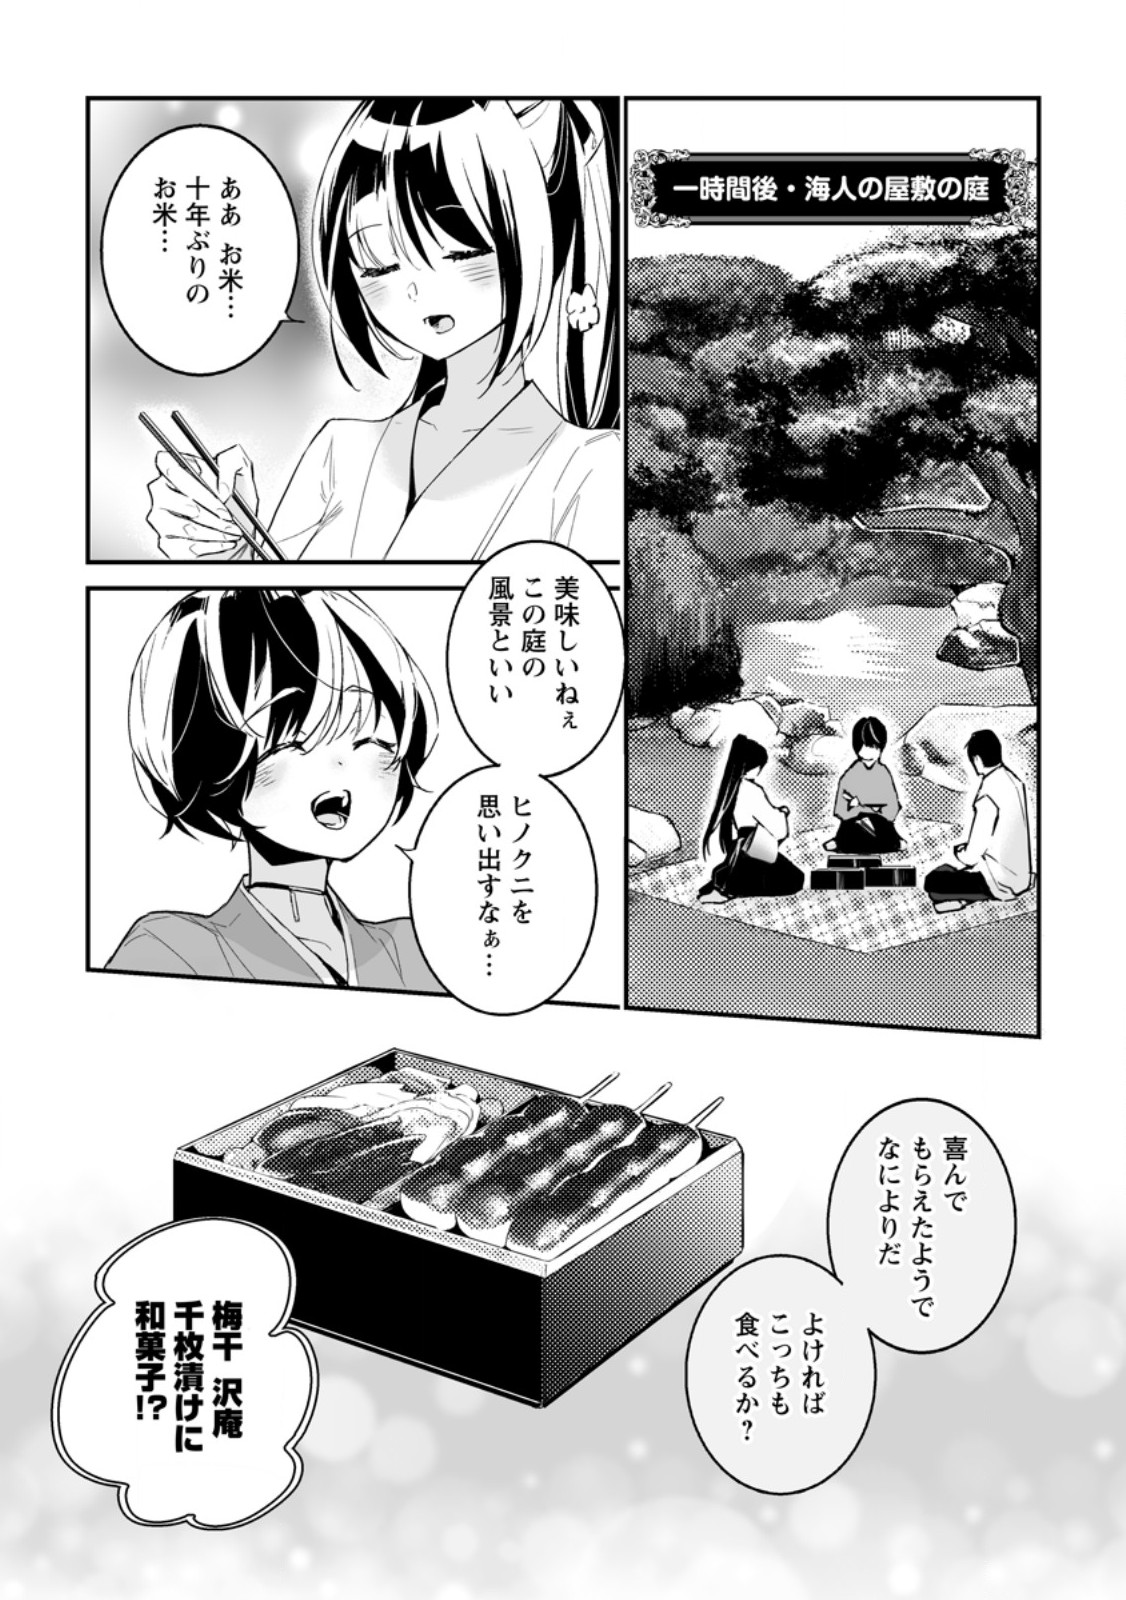 Hakui no Eiyuu - Chapter 31.1 - Page 1